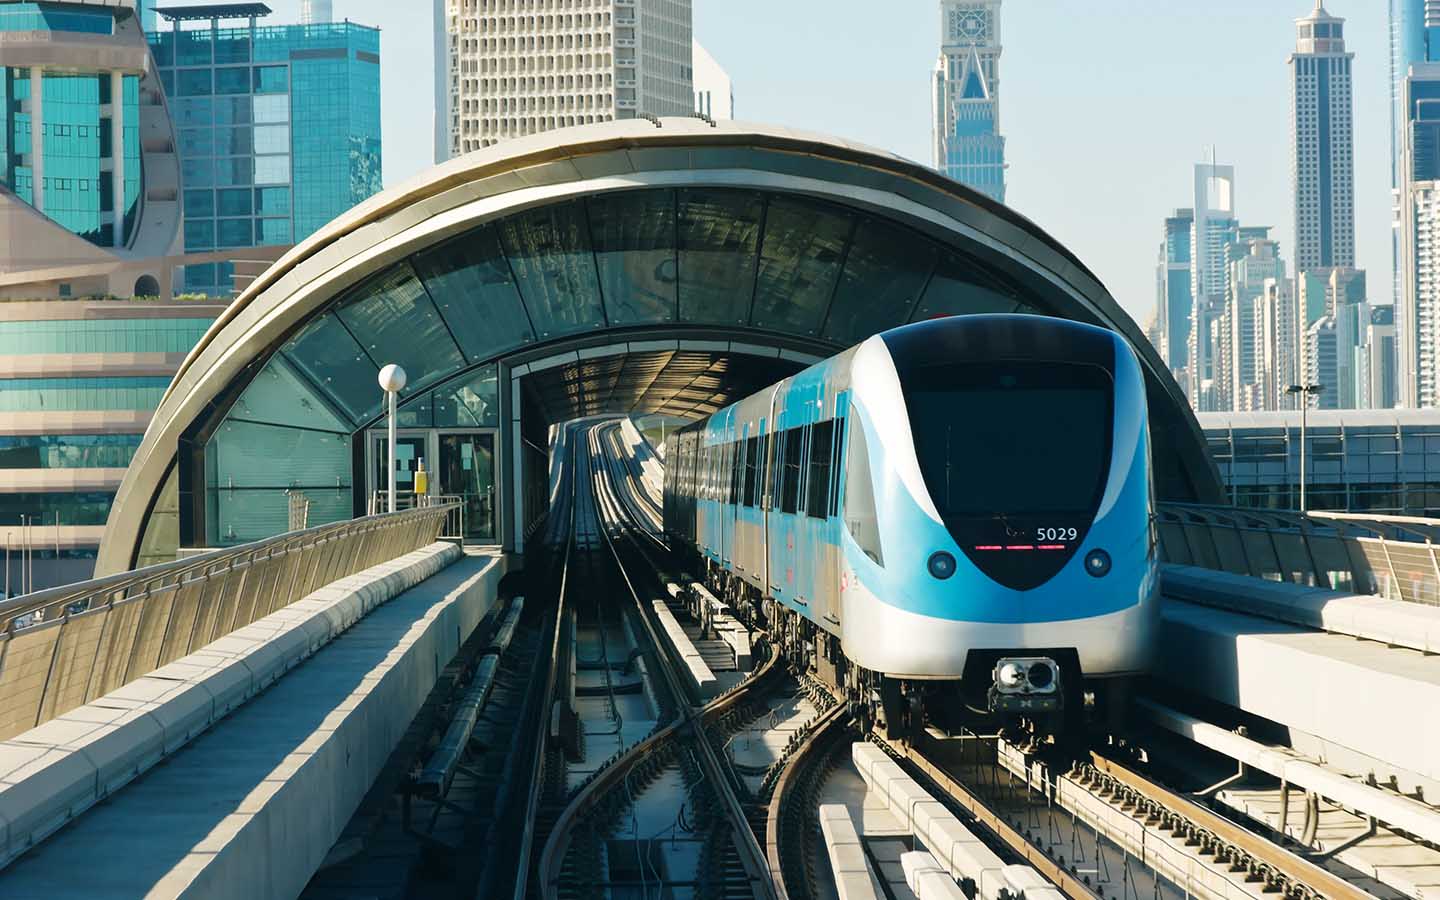 dubai metro blue line is the 5th strategic plan to enhance railway system in Dubai